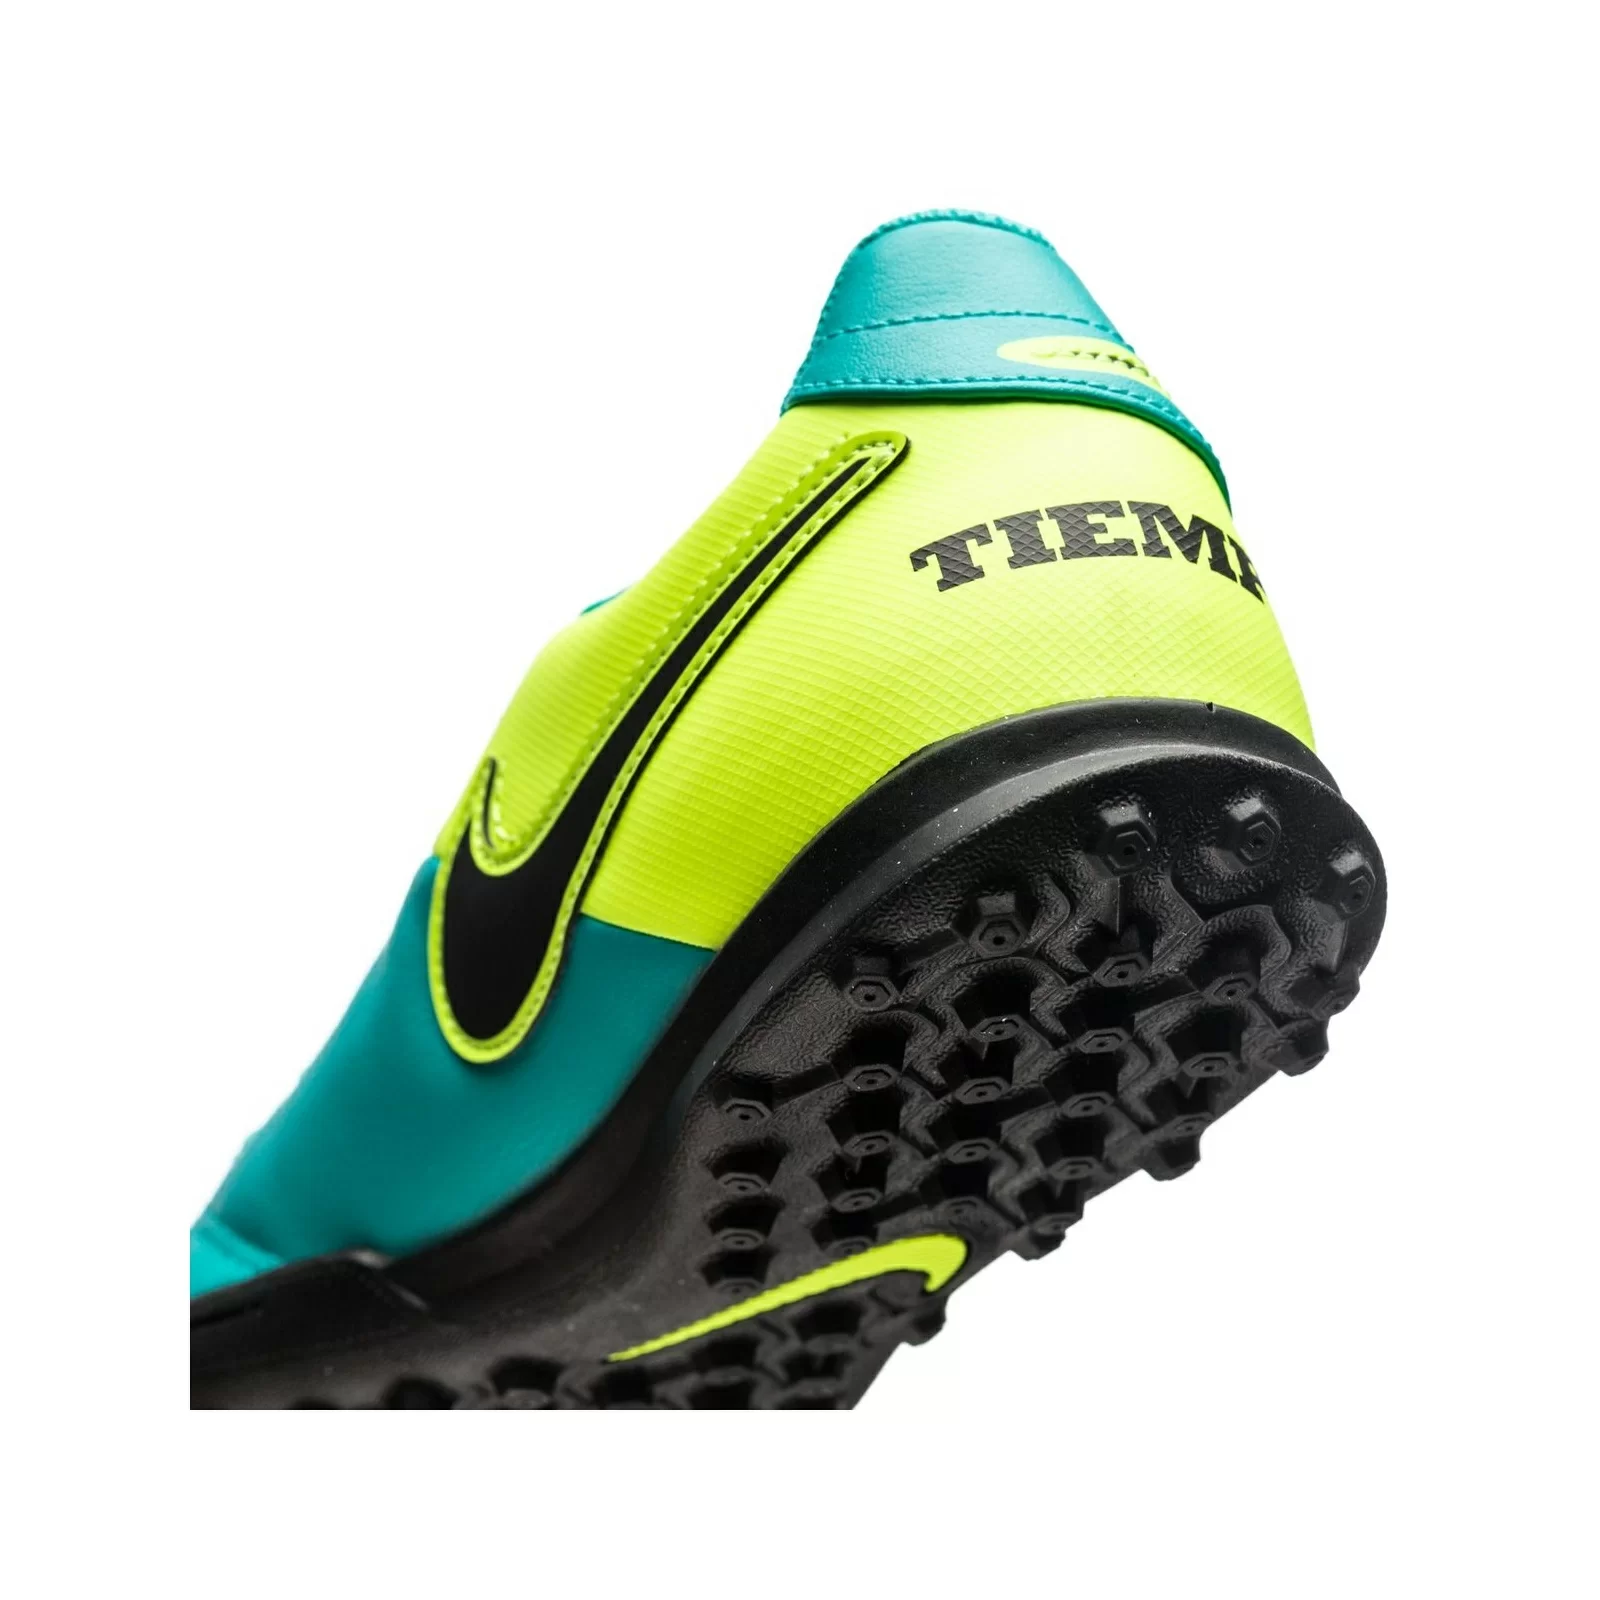 Реальное фото Бутсы Nike Tiempo Rio III 819237-307 от магазина СпортСЕ